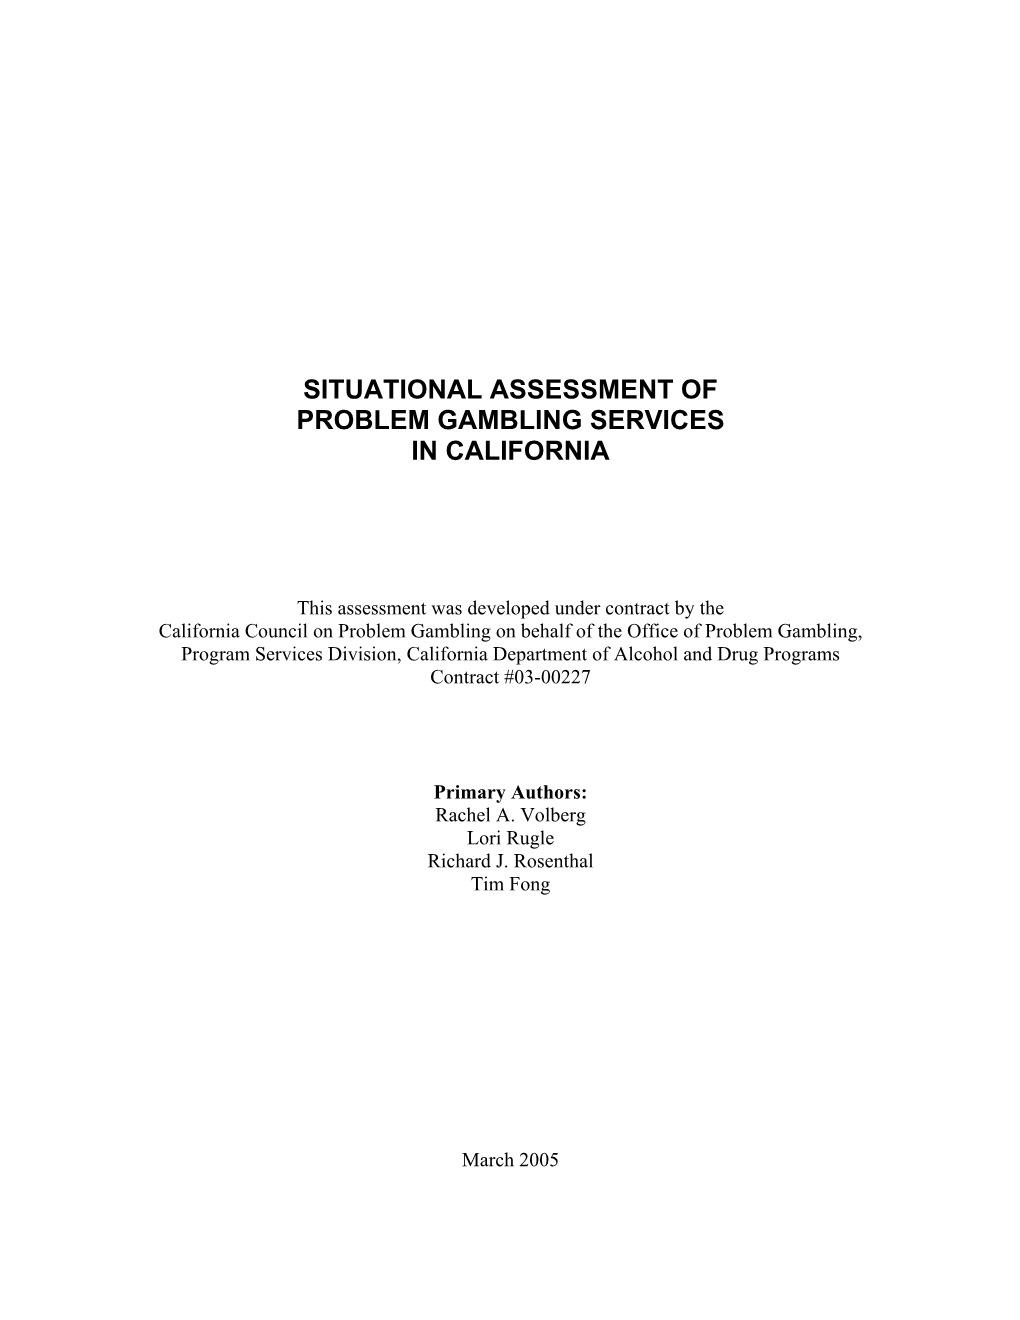 2005 California Problem Gambling Situational Assessment